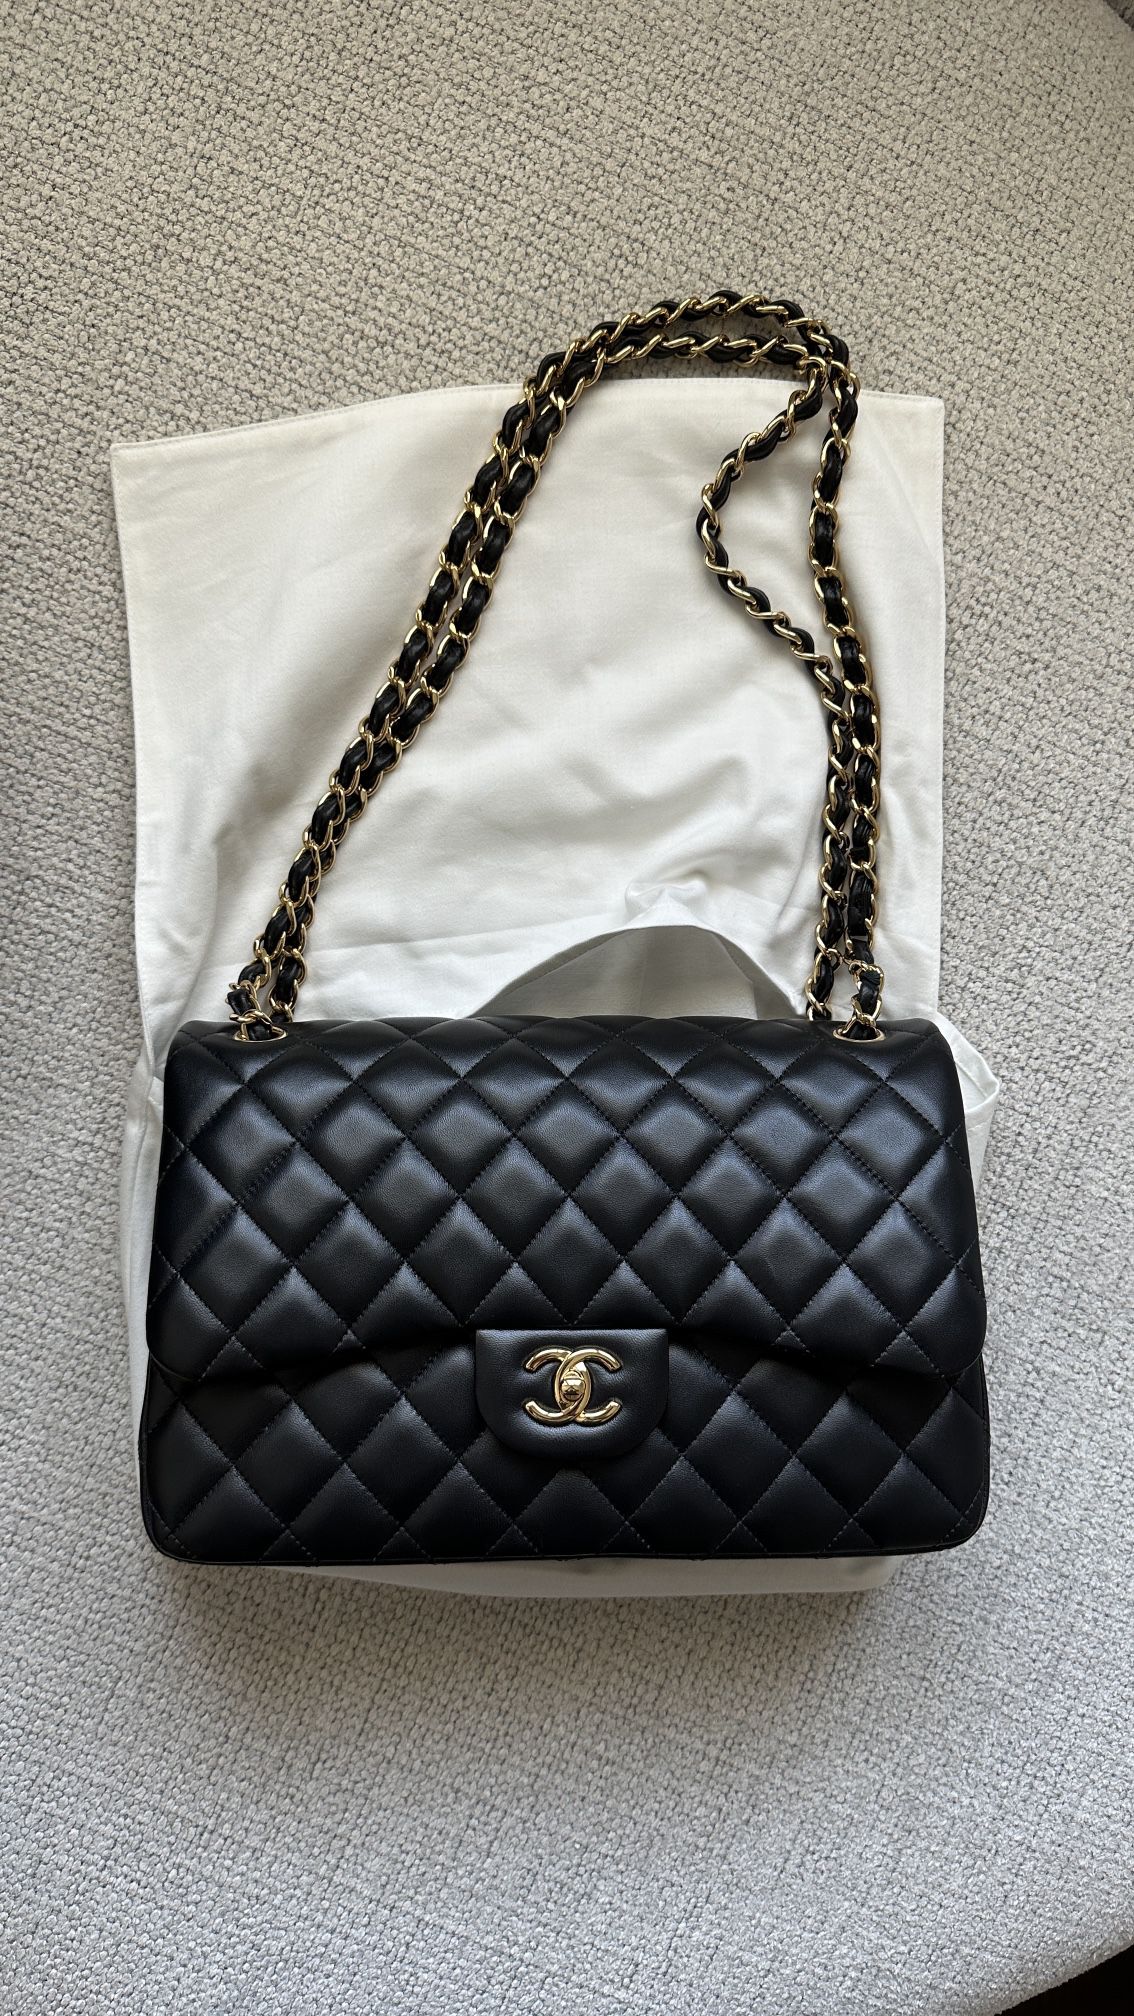 Chanel Large Classic Handbag 